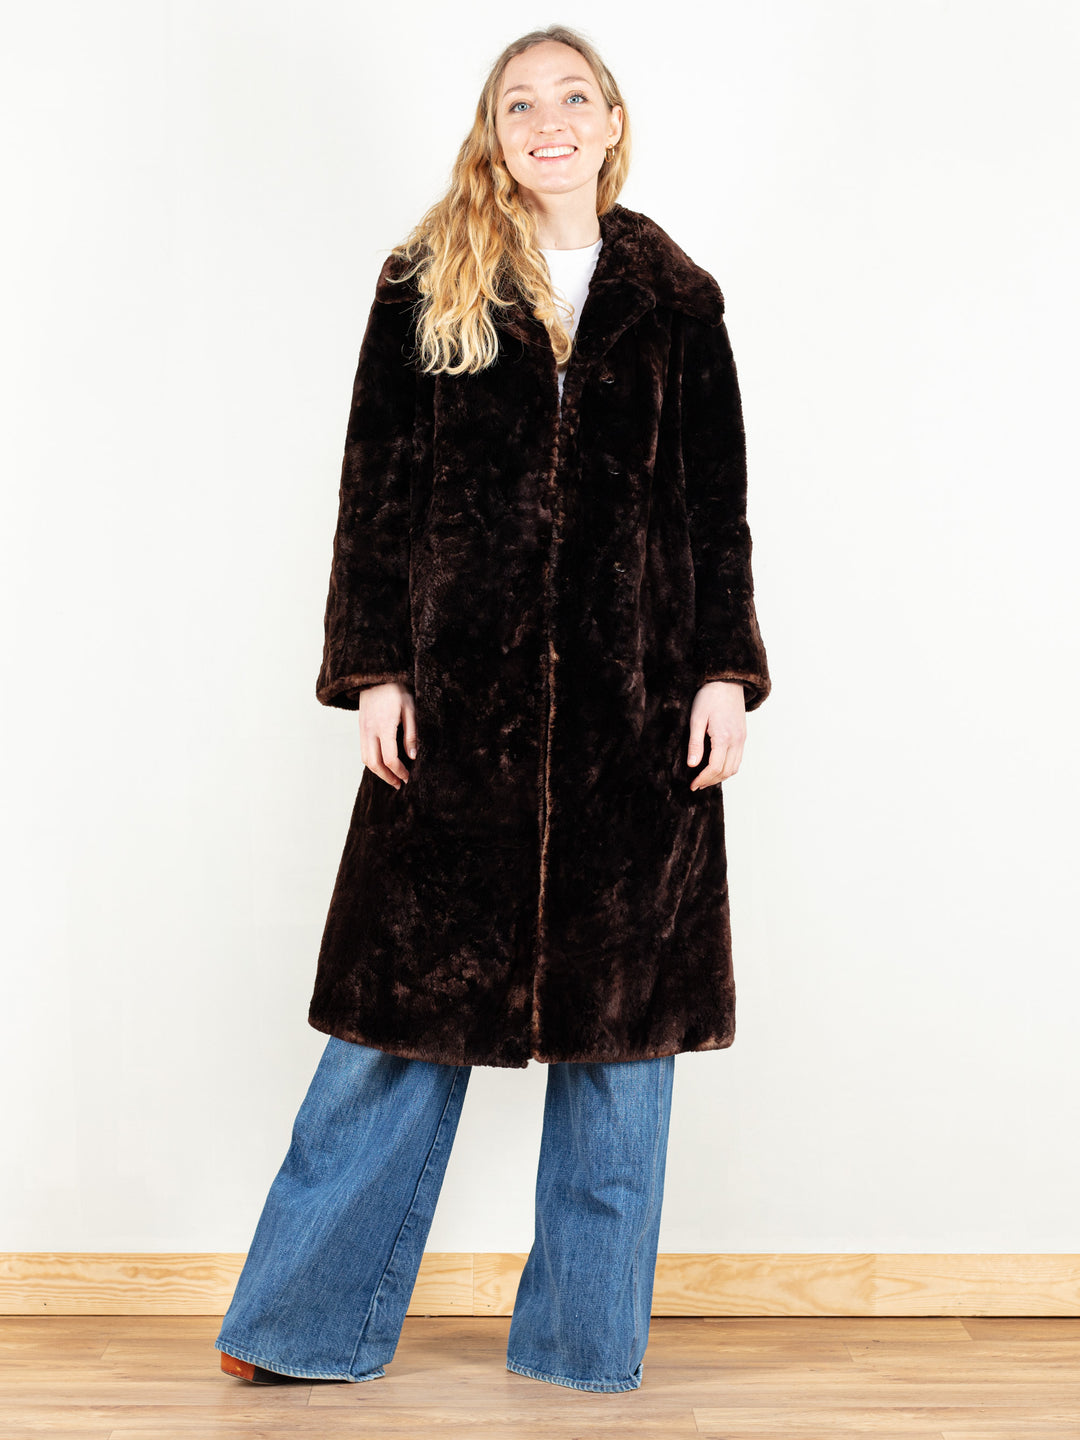 Brown Fur Coat vintage 70s soft real fur coat maxi length warm fur coat vintage clothing luxurious outerwear 70s clothing size medium